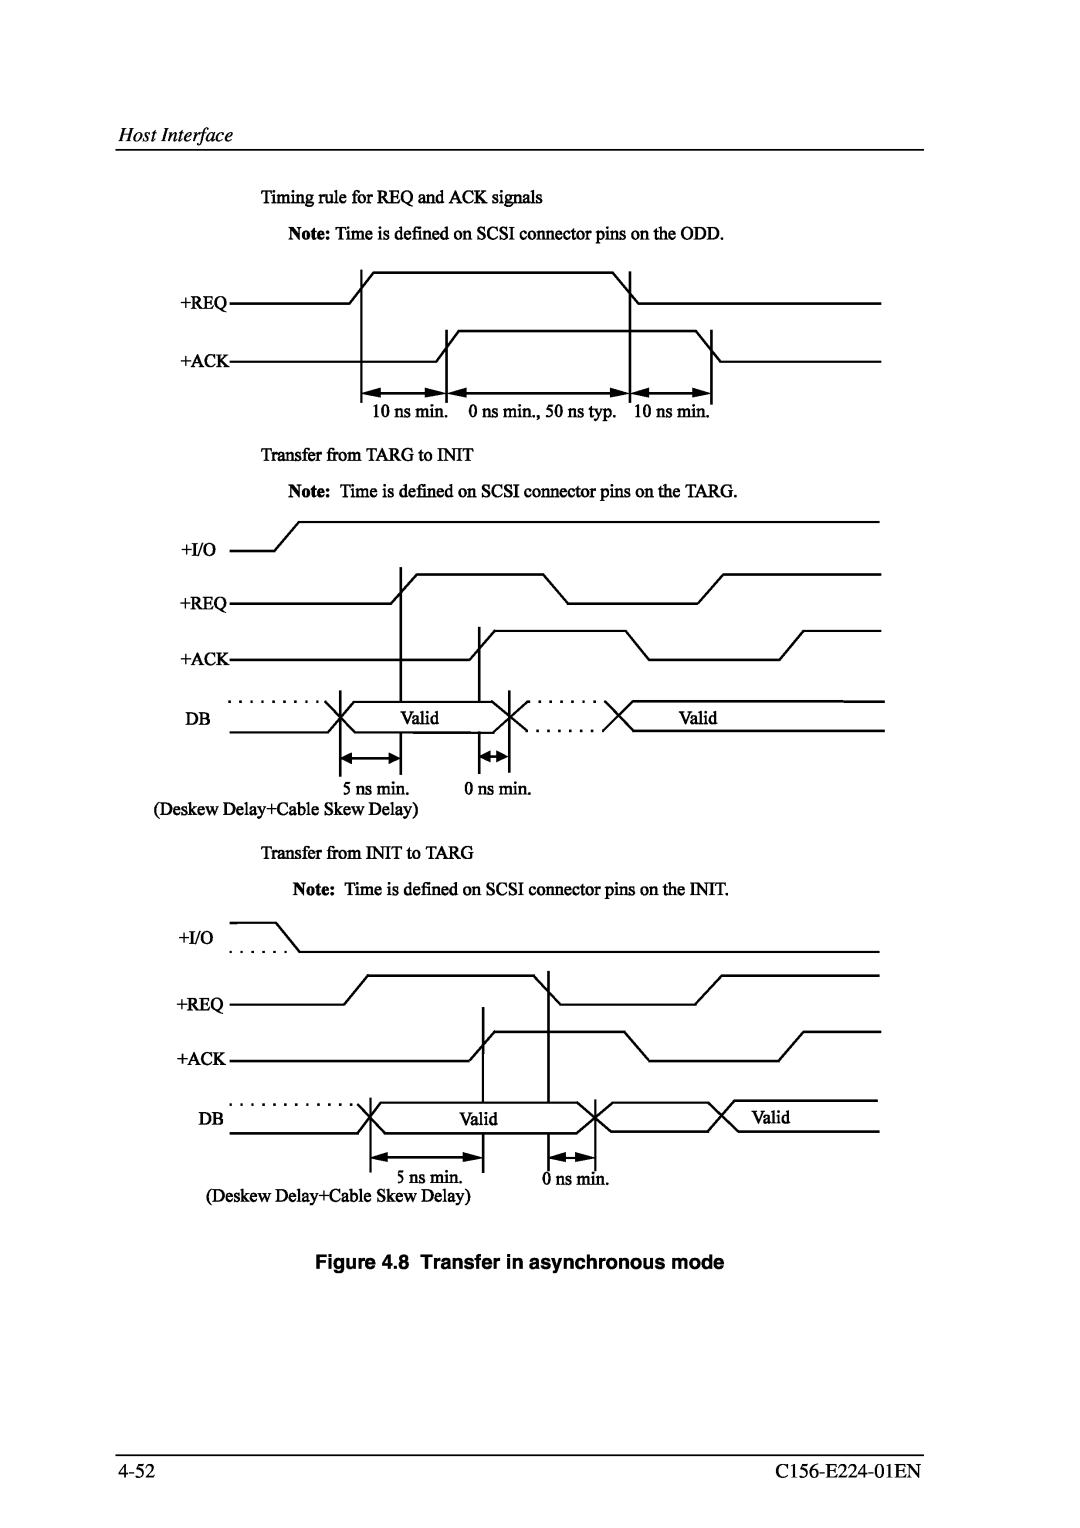 Fujitsu MCJ3230SS manual 8 Transfer in asynchronous mode, 4-52, C156-E224-01EN 